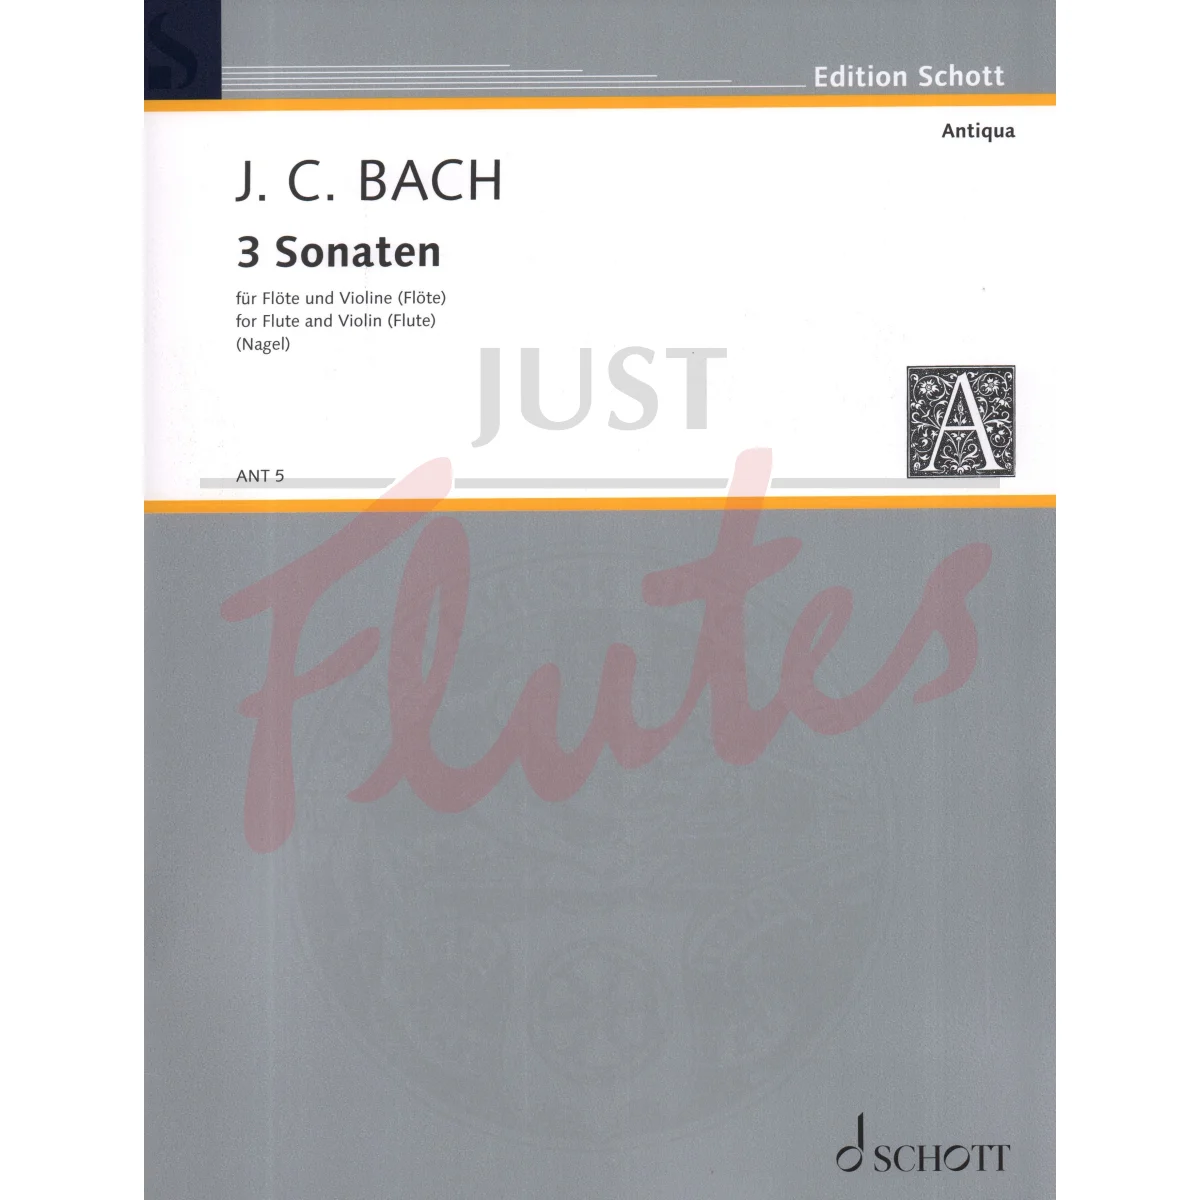 Three Sonatas for Flute and Violin